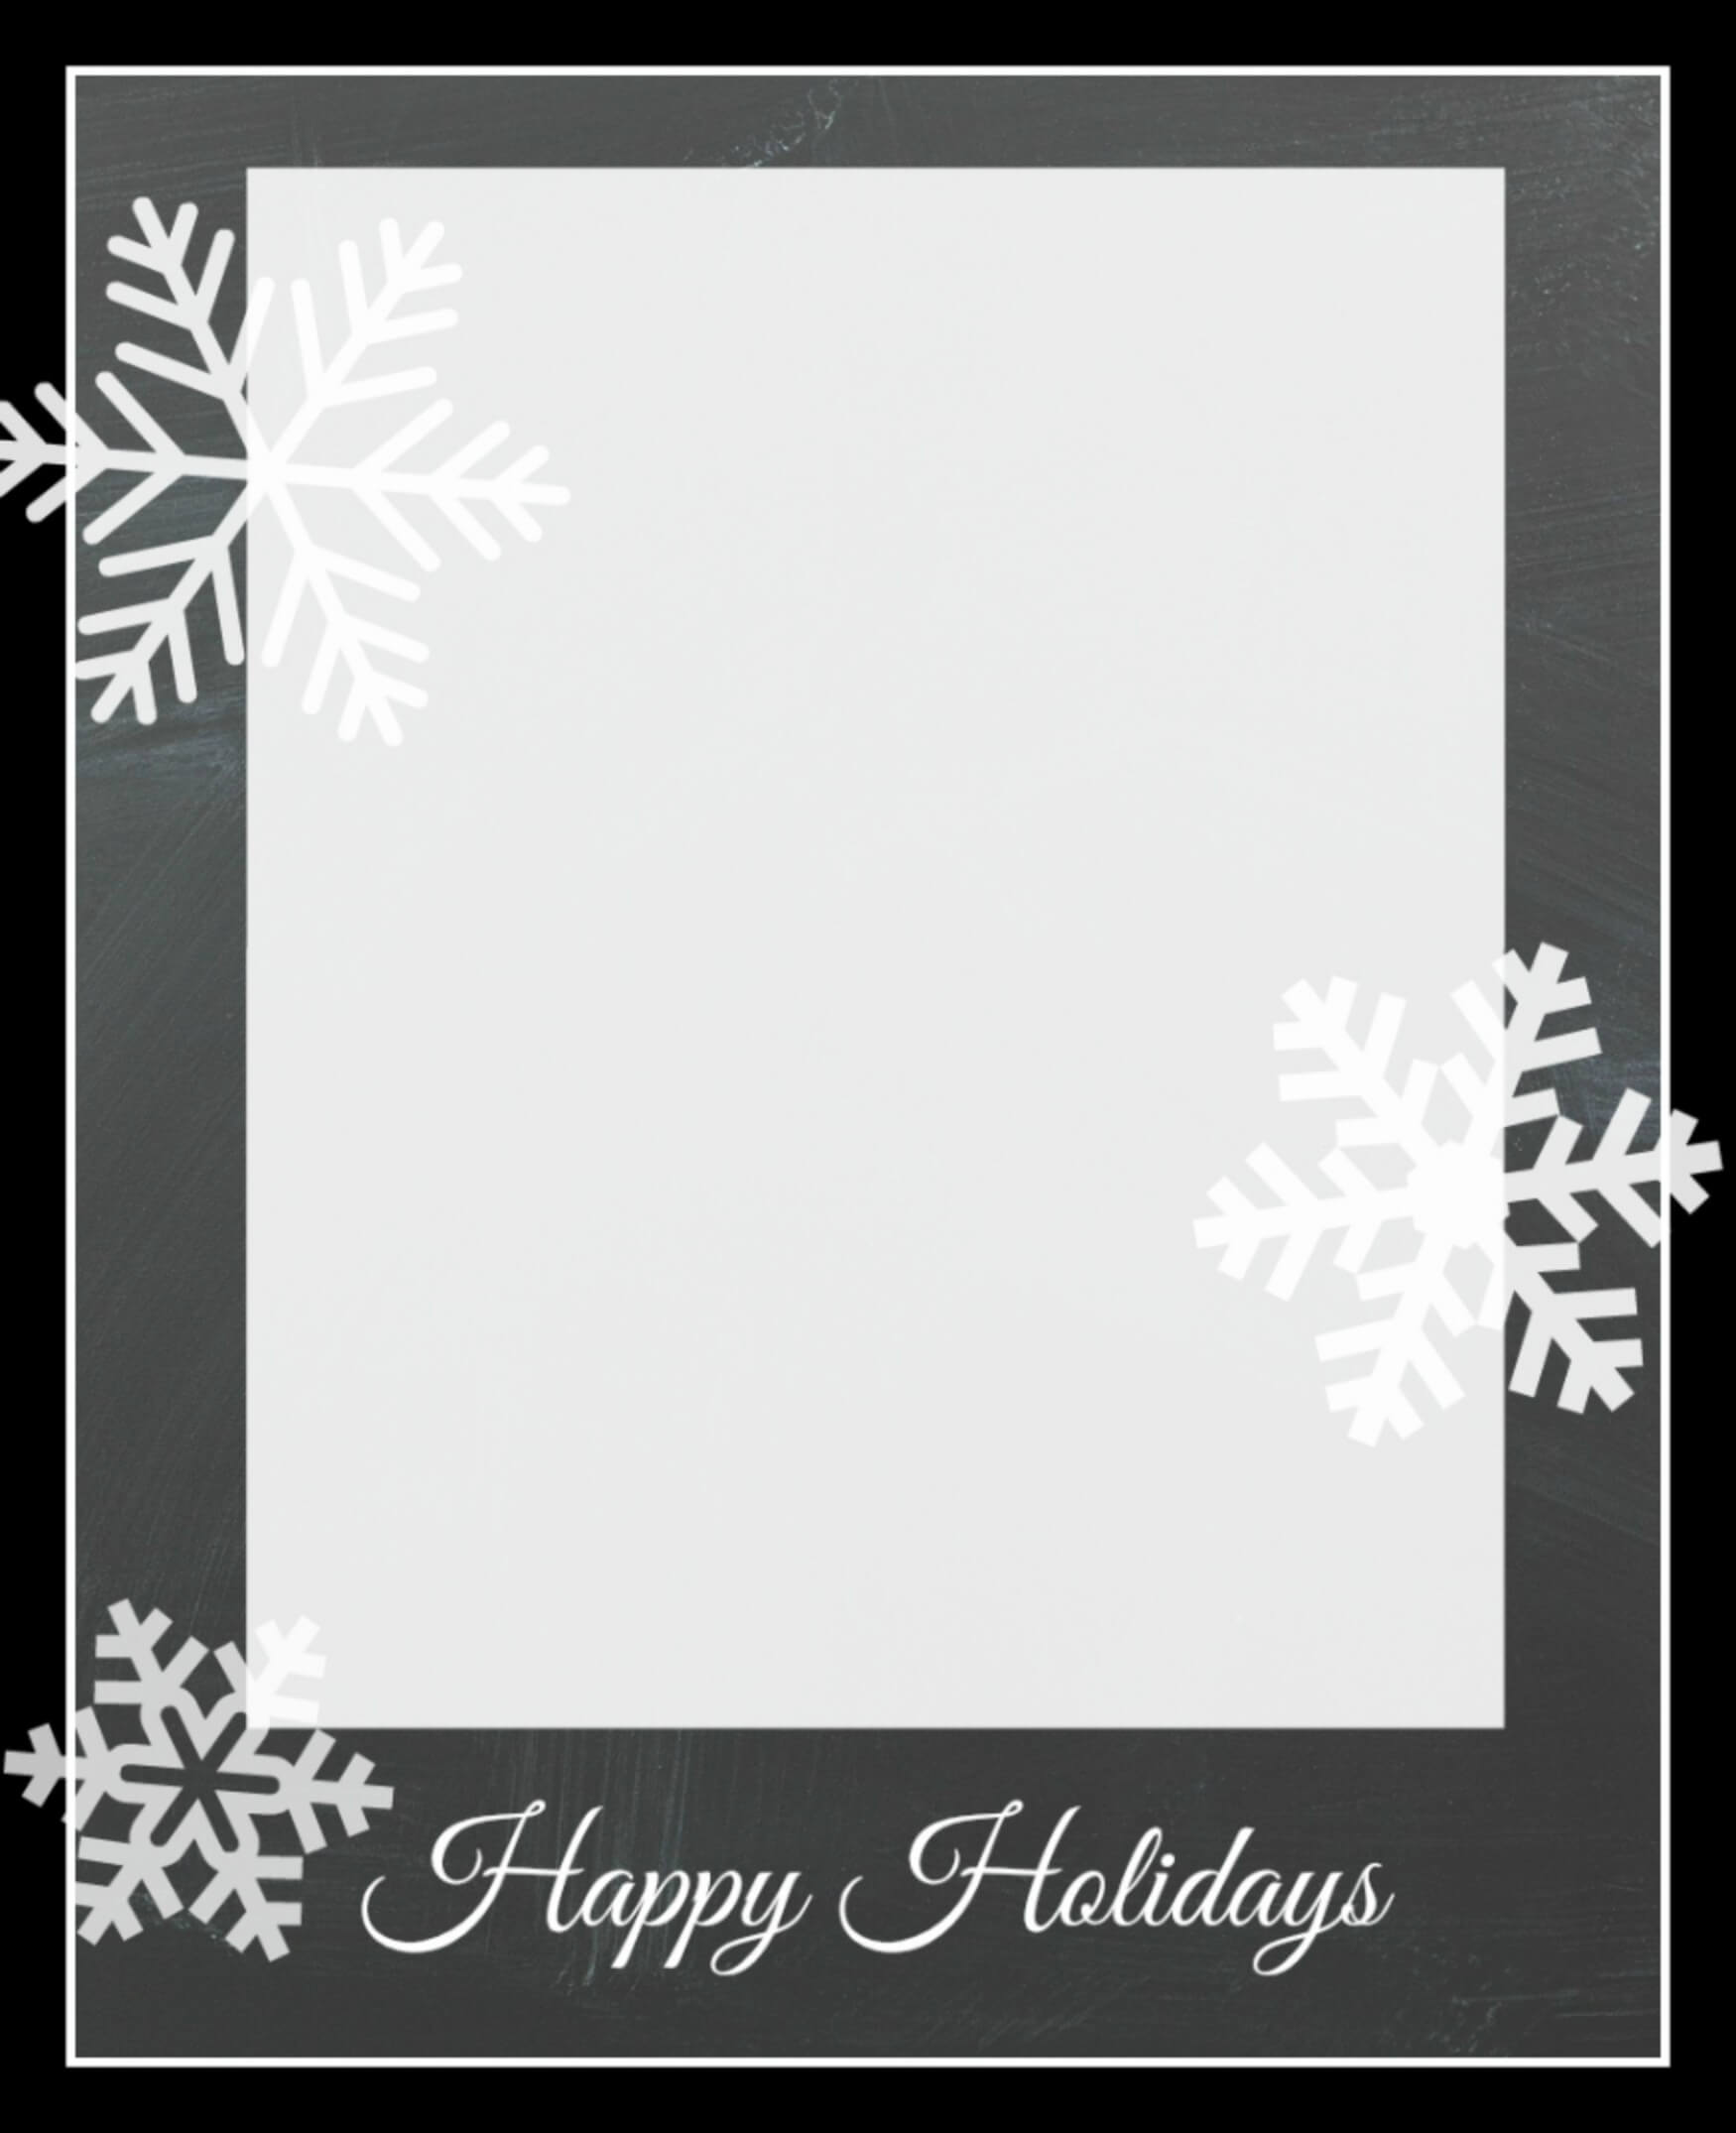 002 Snowflakecard3 Holiday Card Templates Free Template Intended For Happy Holidays Card Template